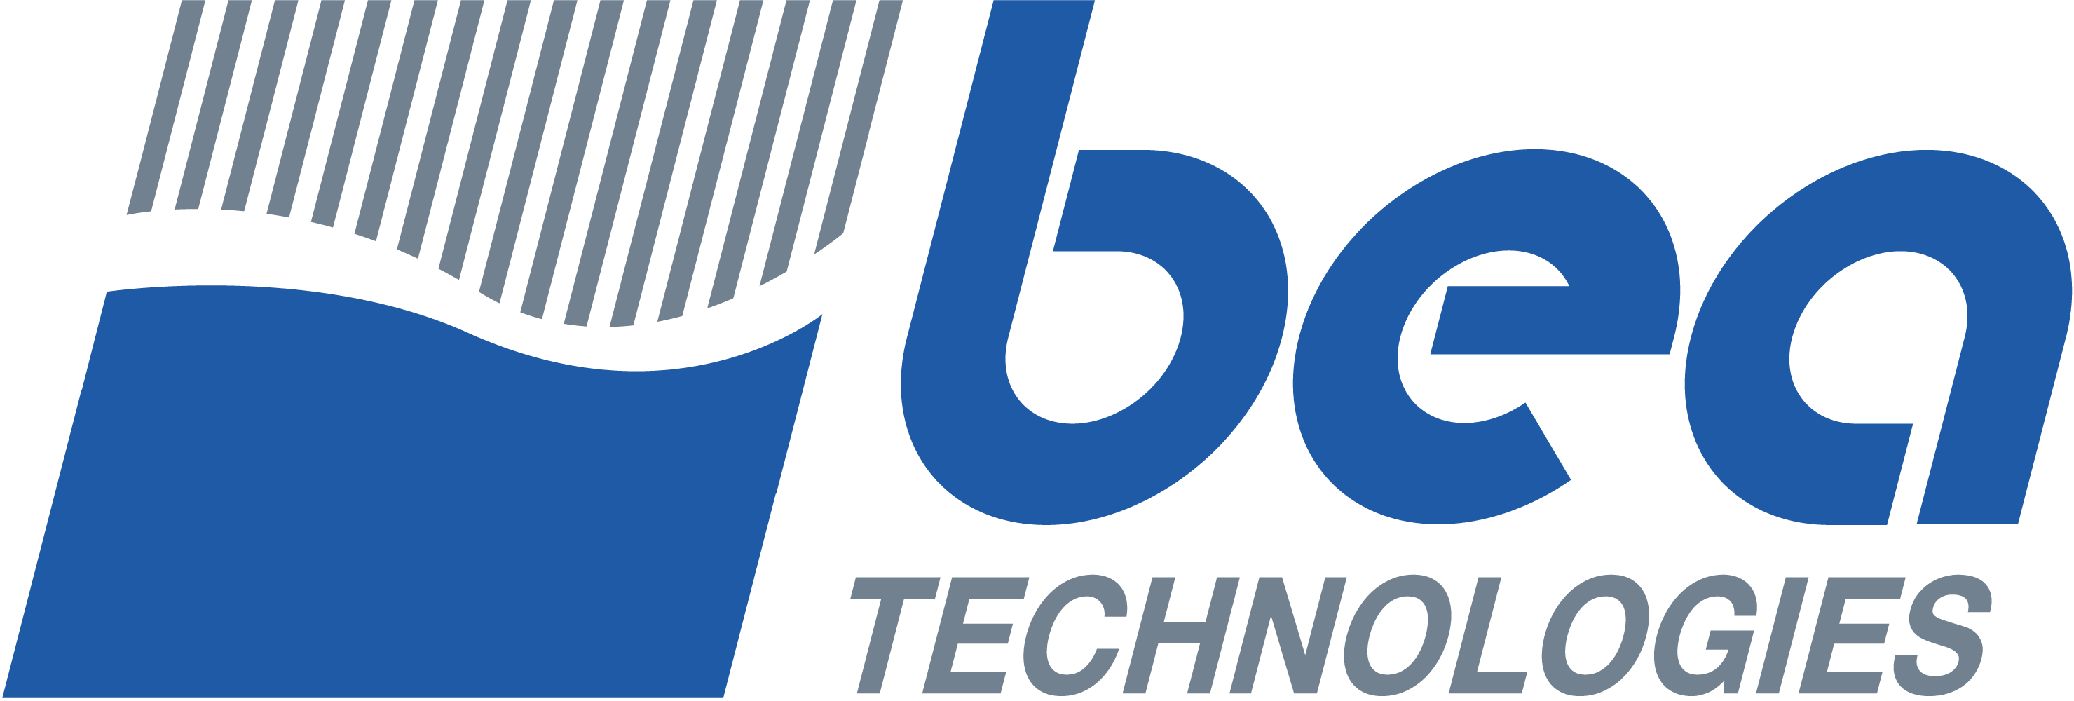 BEA Technologies